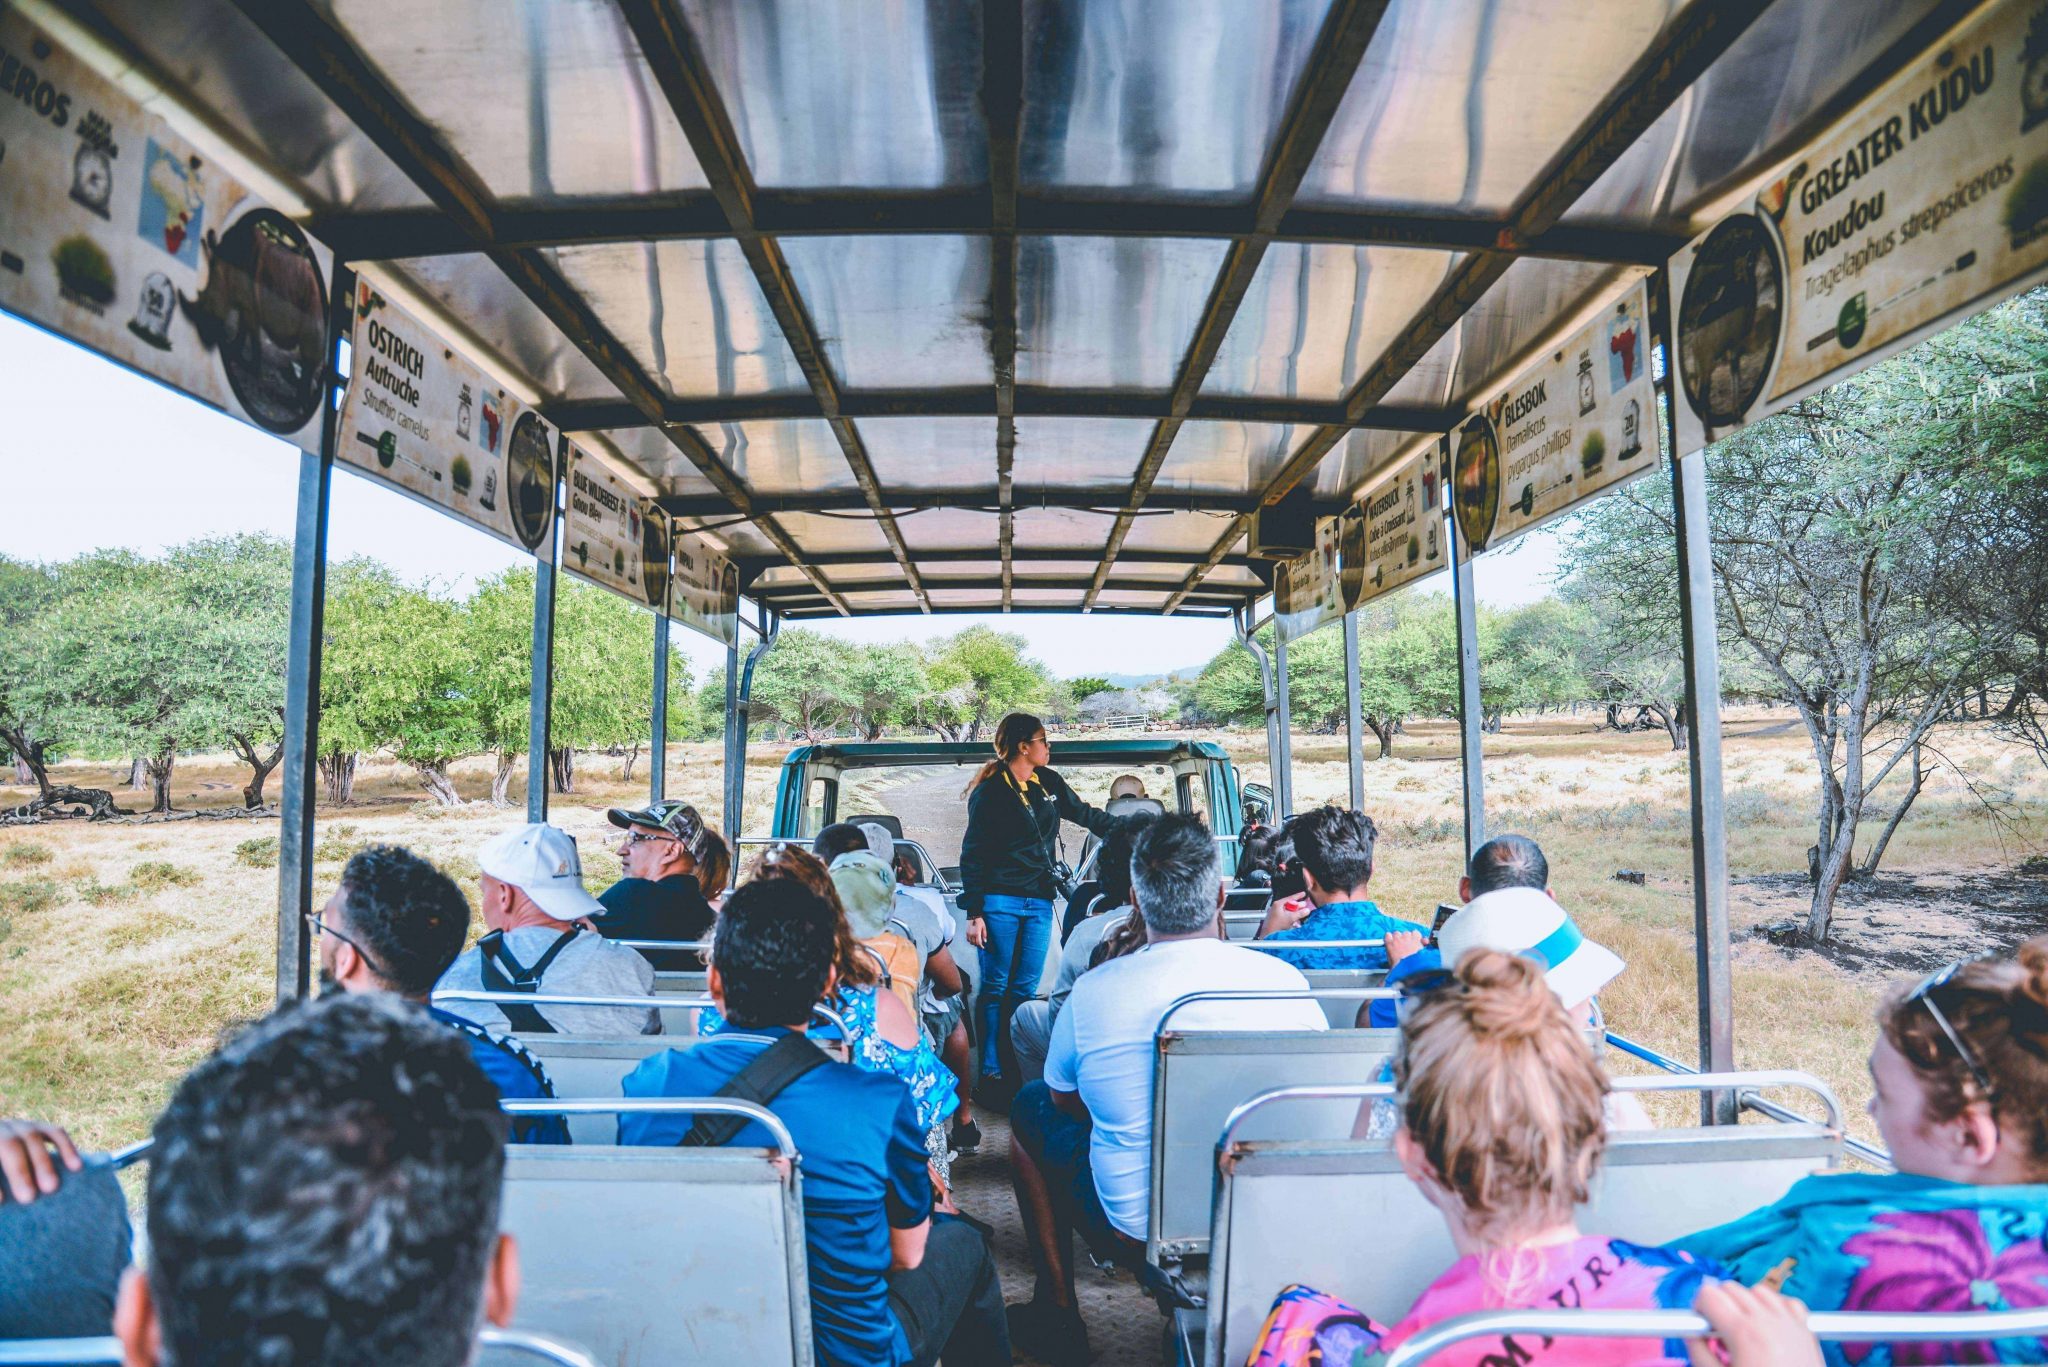 safari bus times